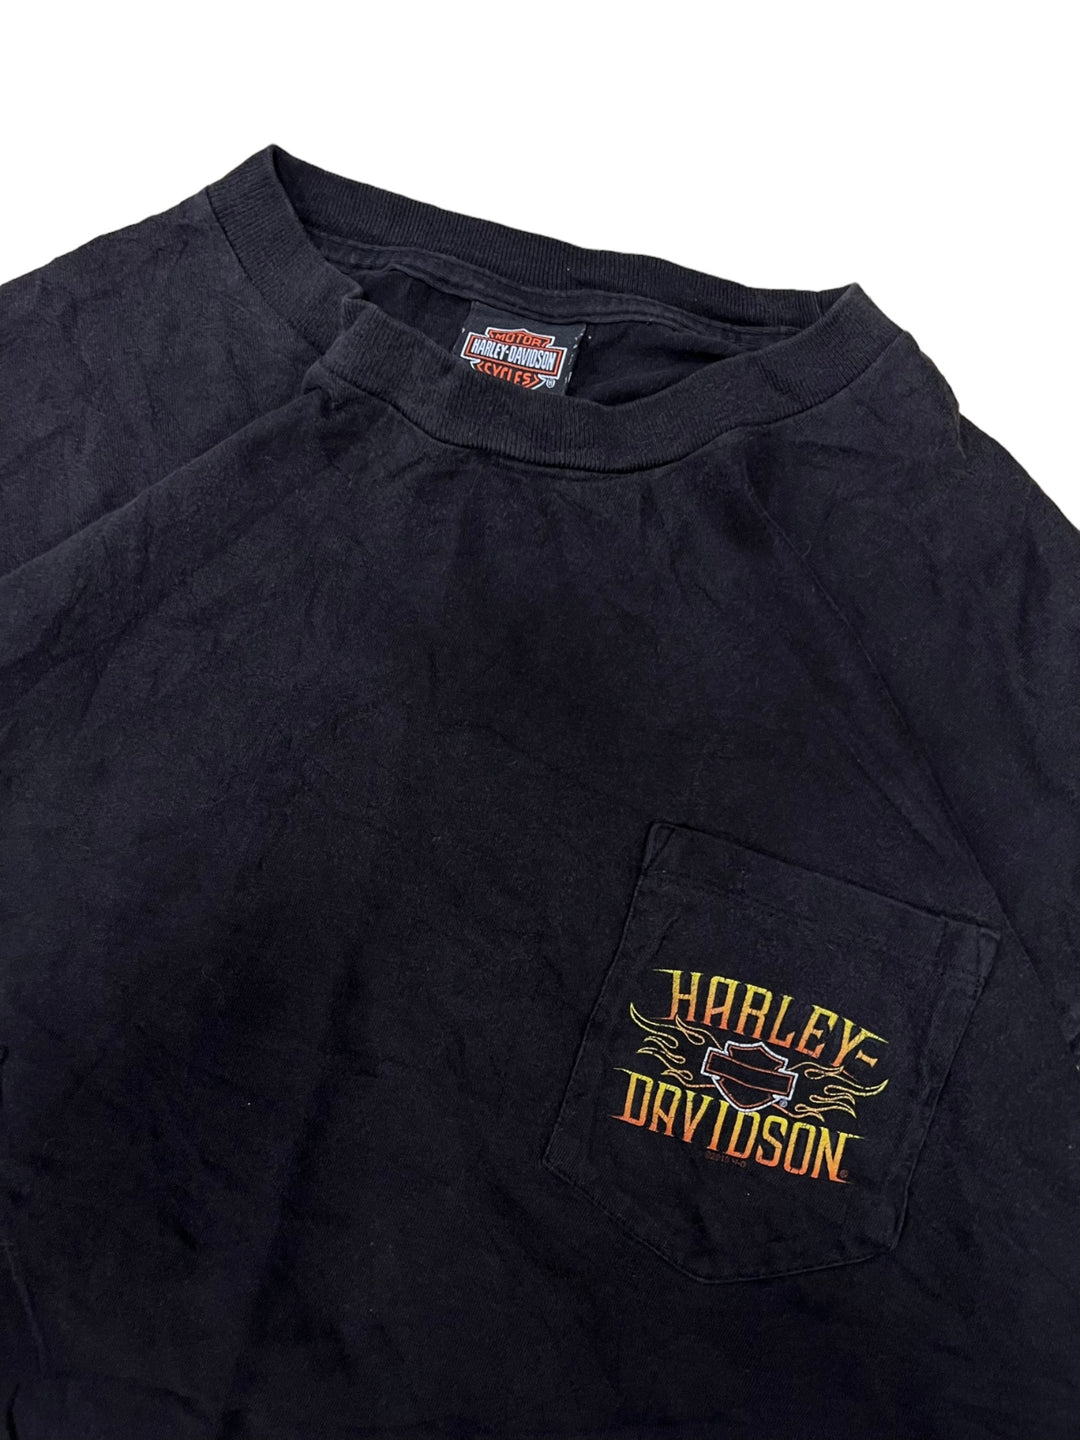 Harley-Davidson vintage long sleeve shirt men’s Extra Large